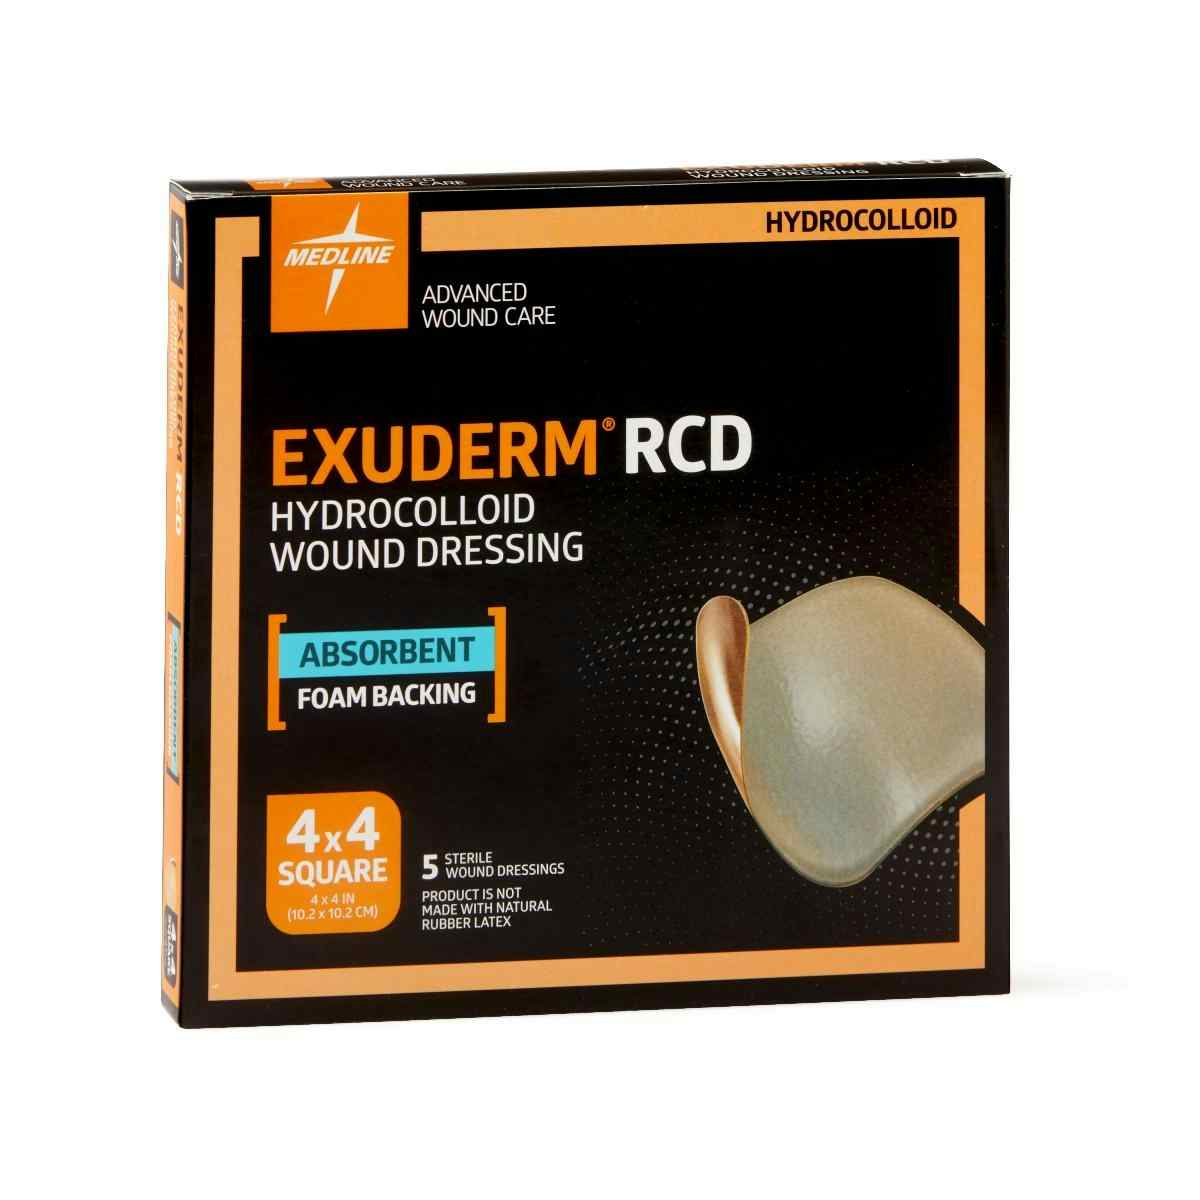 Exuderm RCD Hydrocolloid Wound Dressing